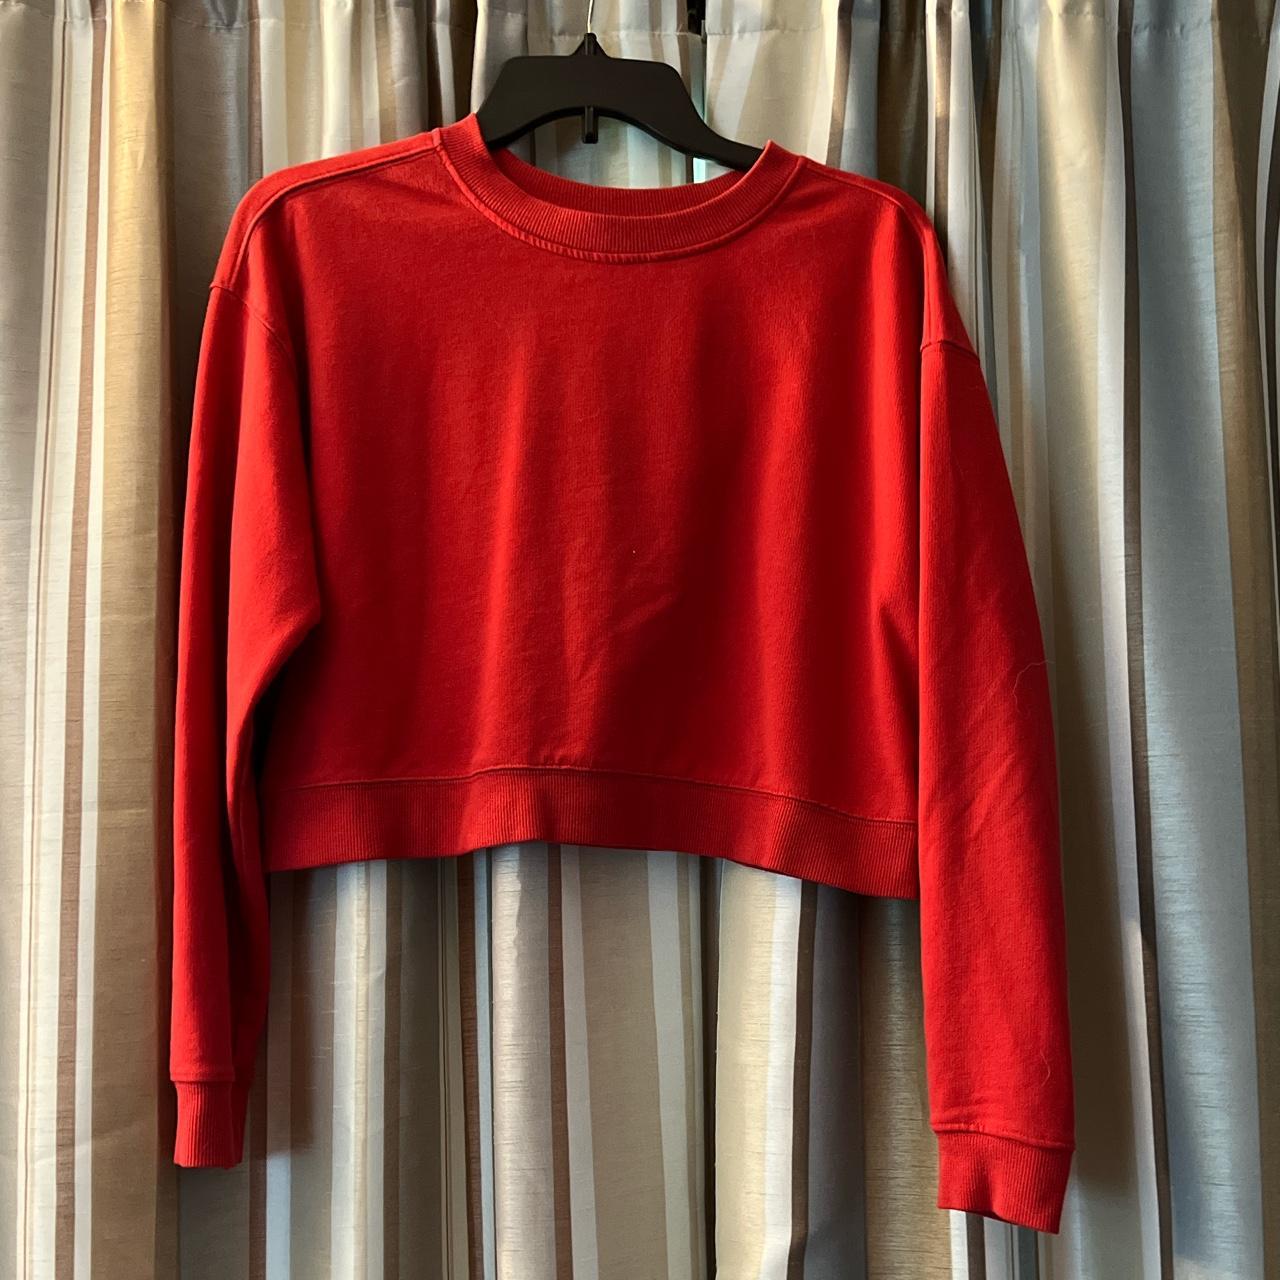 Basic crop top sweatshirt women’s size medium no